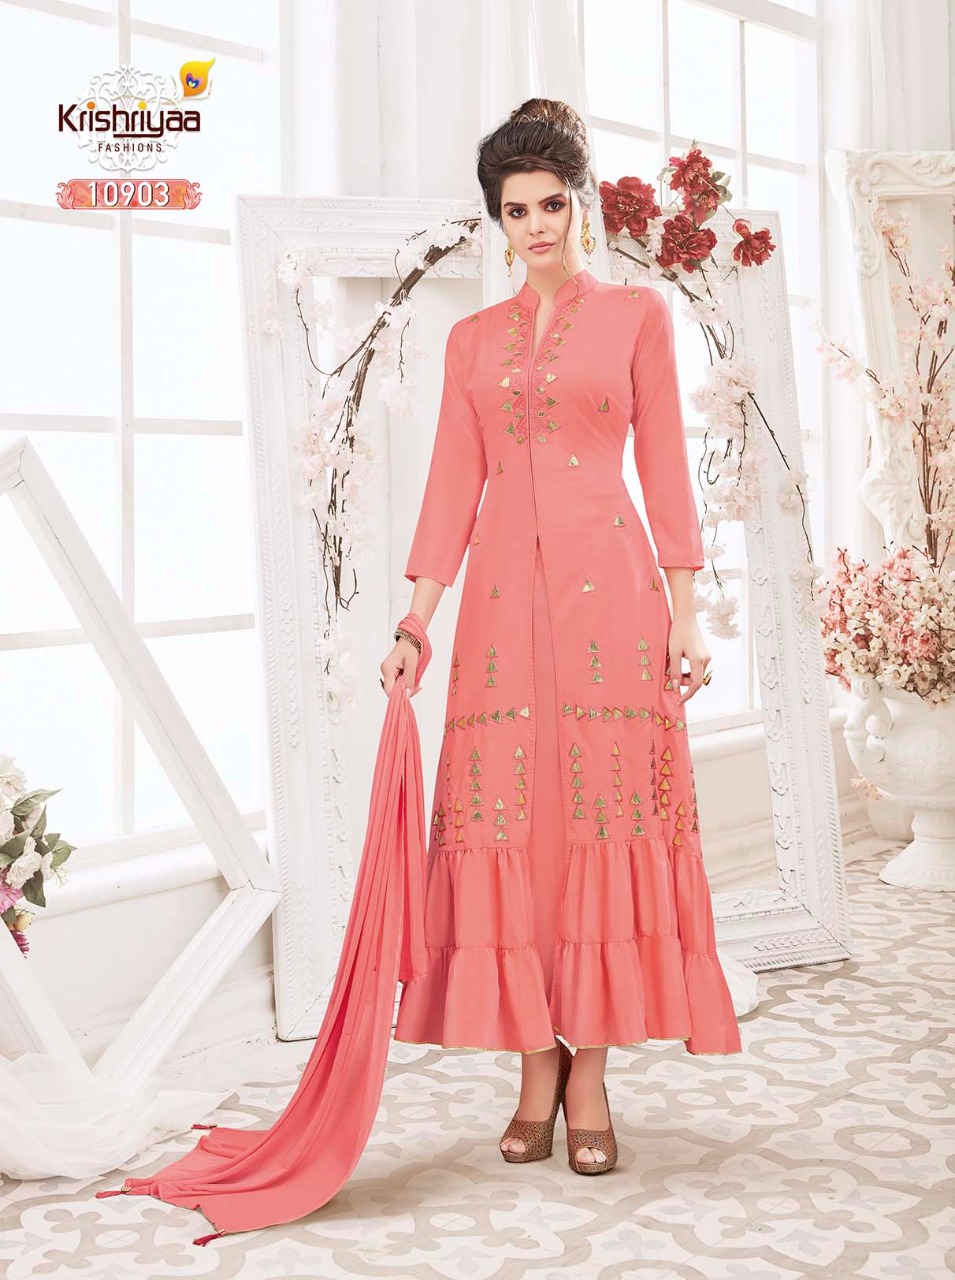 Krishriyaa presents magnifique vol 3 special festive season flaried gowns collection